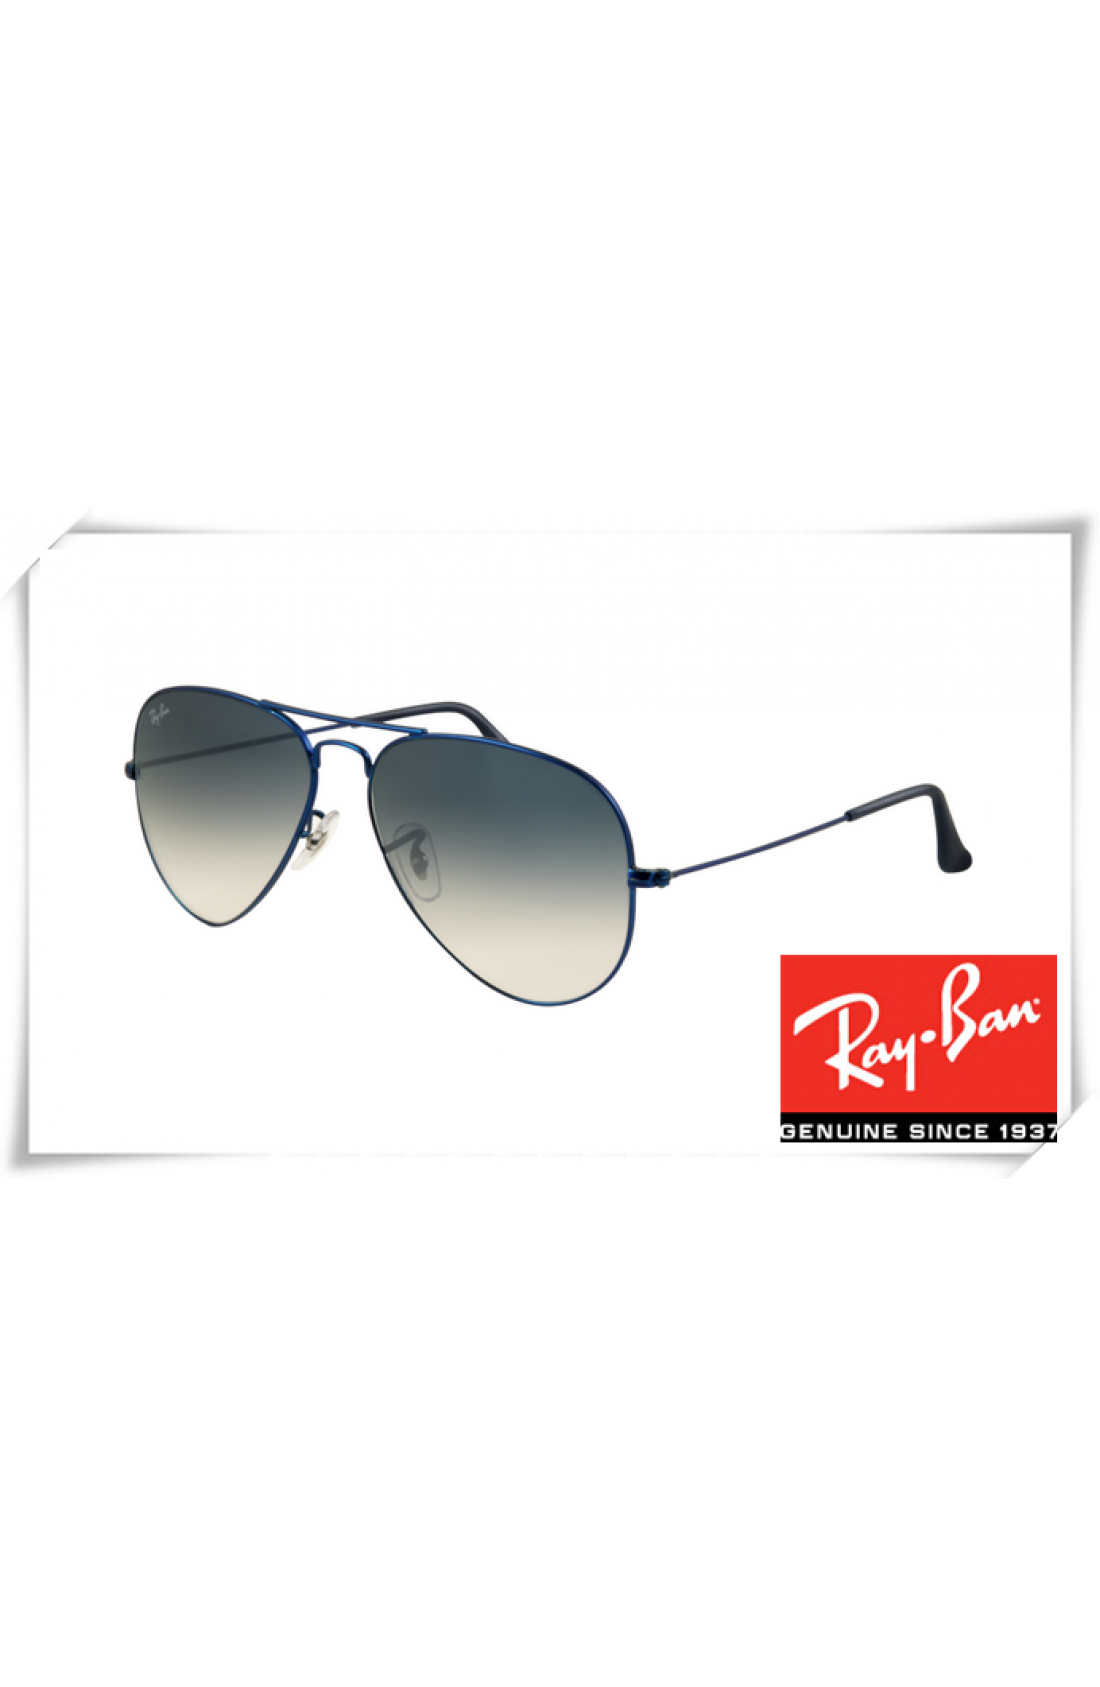 Fake Ray Ban Rb3025 Aviator Sunglasses Metal Blue Frame Light Blue Gradient Lens